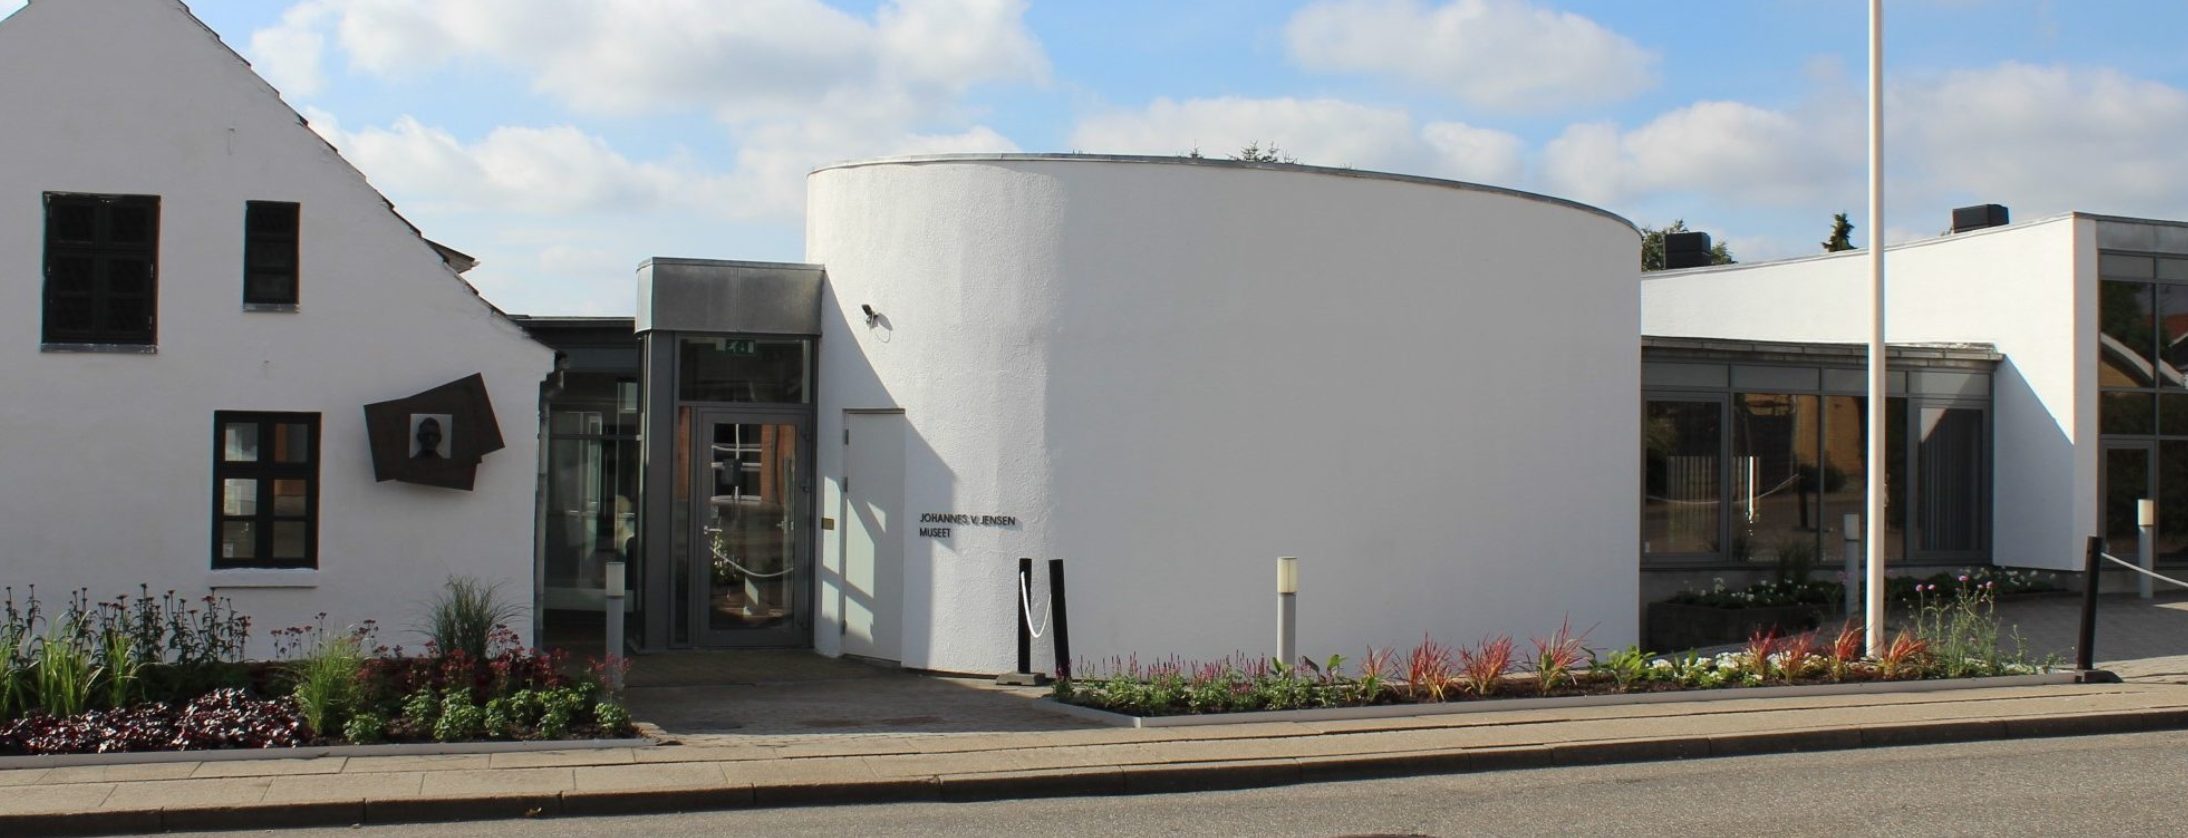 Jensenmuseet i Farsø